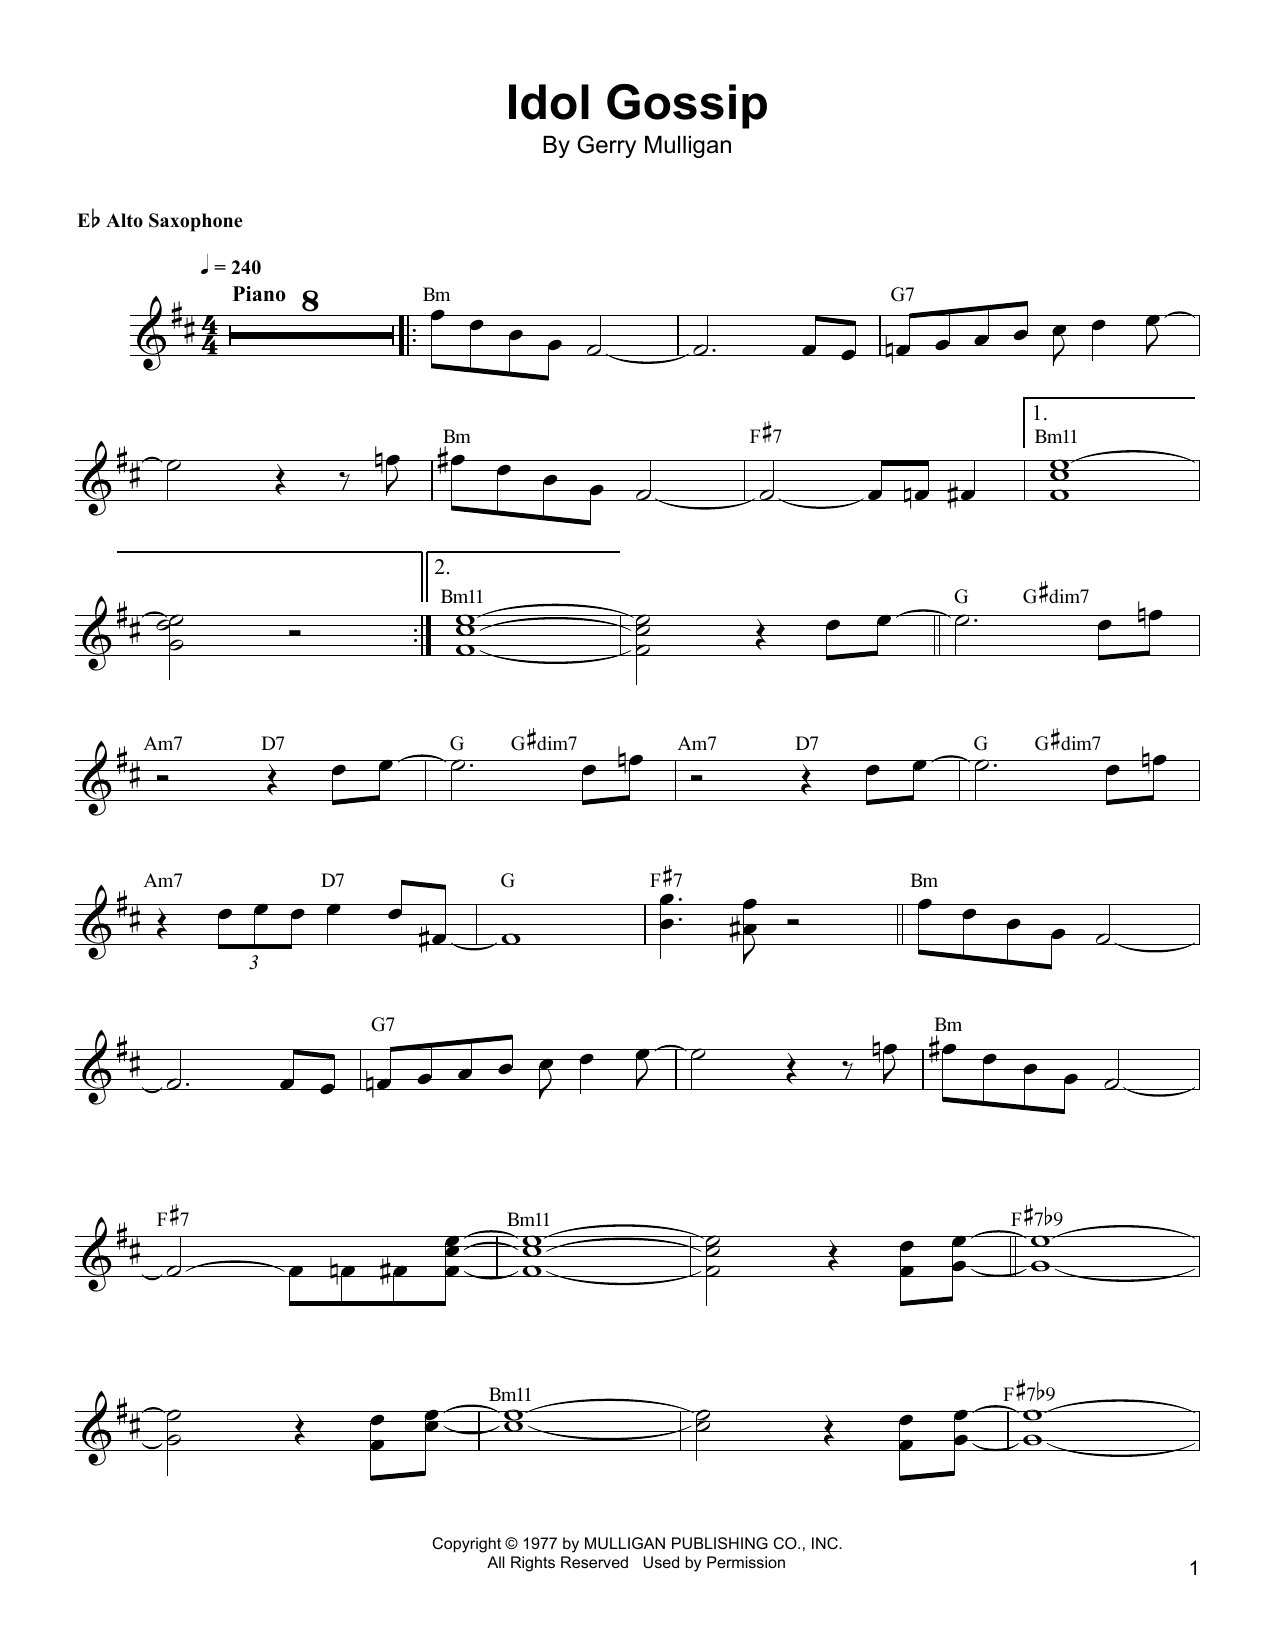 Bud Shank Idol Gossip Sheet Music Notes & Chords for Alto Sax Transcription - Download or Print PDF